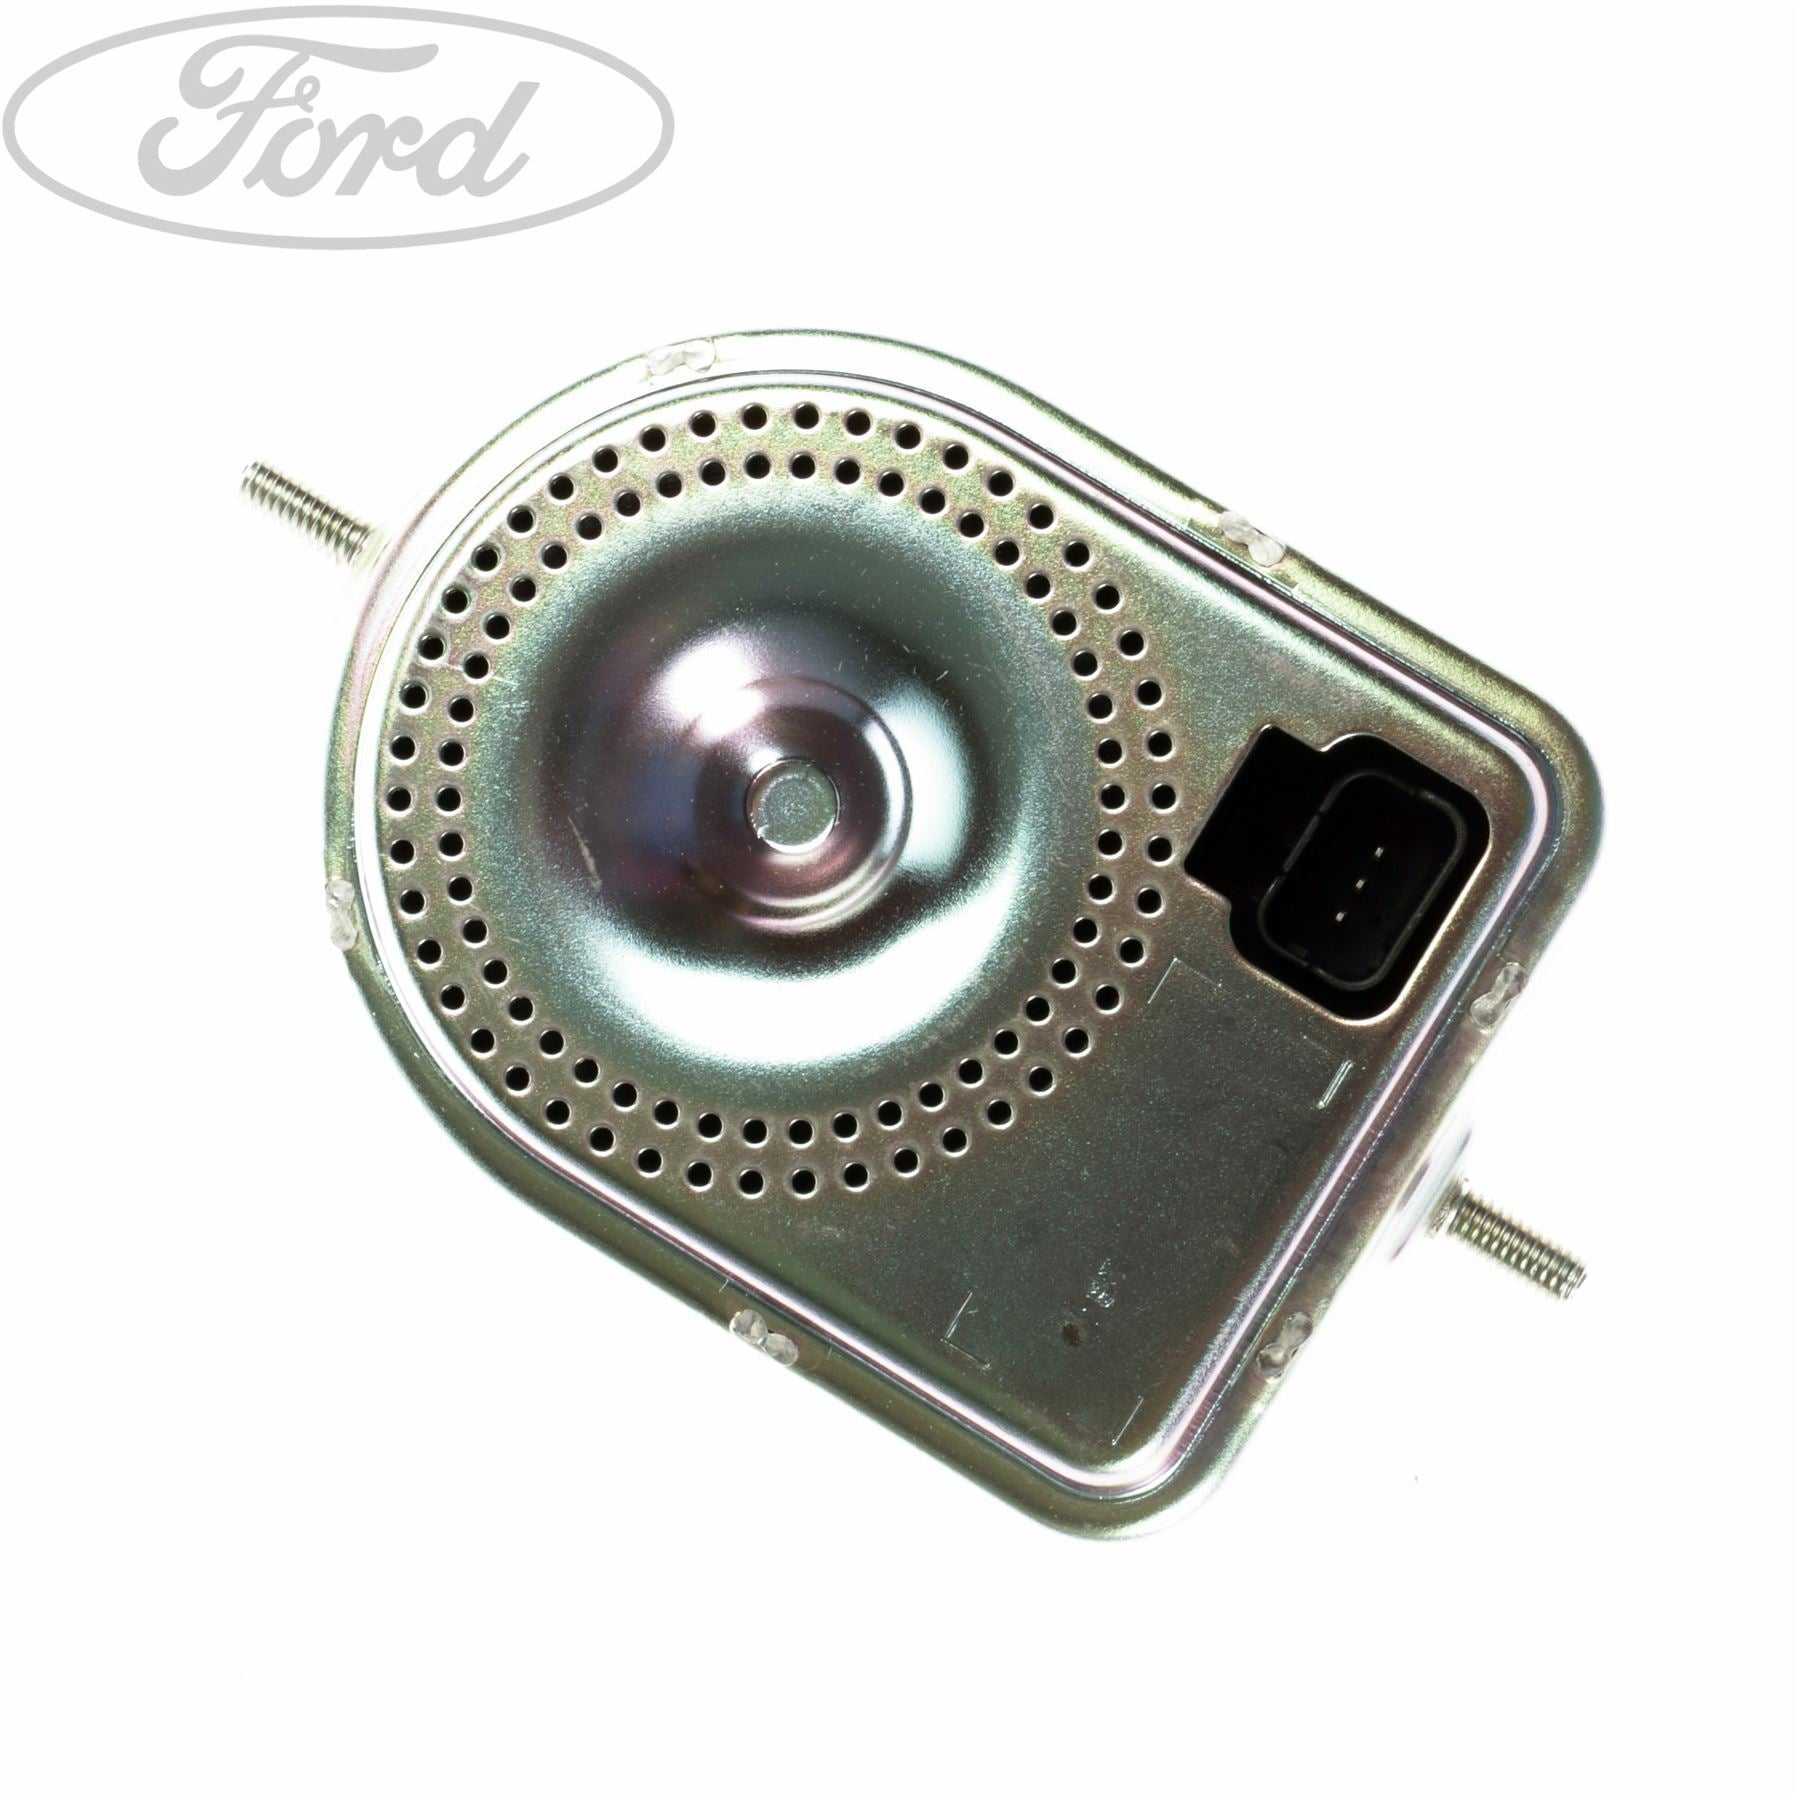 Ford, TRANSIT THATCHAM CATEGORY 1 ALARM SYSTEM CAR HORN